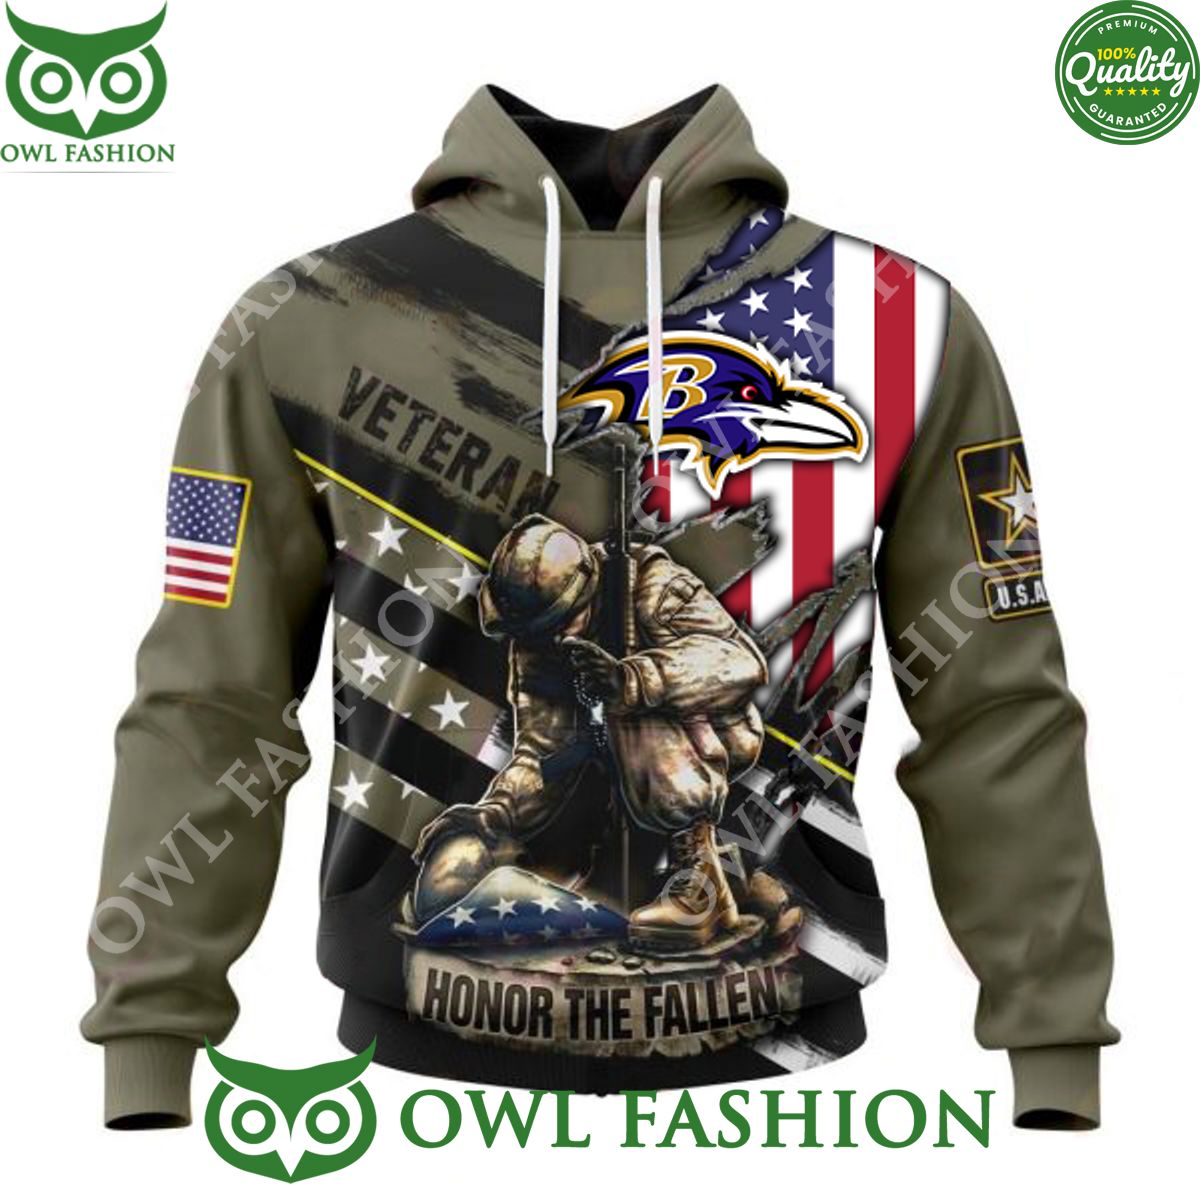 nfl baltimore ravens honor veterans and their families 3d hoodie t shirt sweatshirt 1 ALMsI.jpg